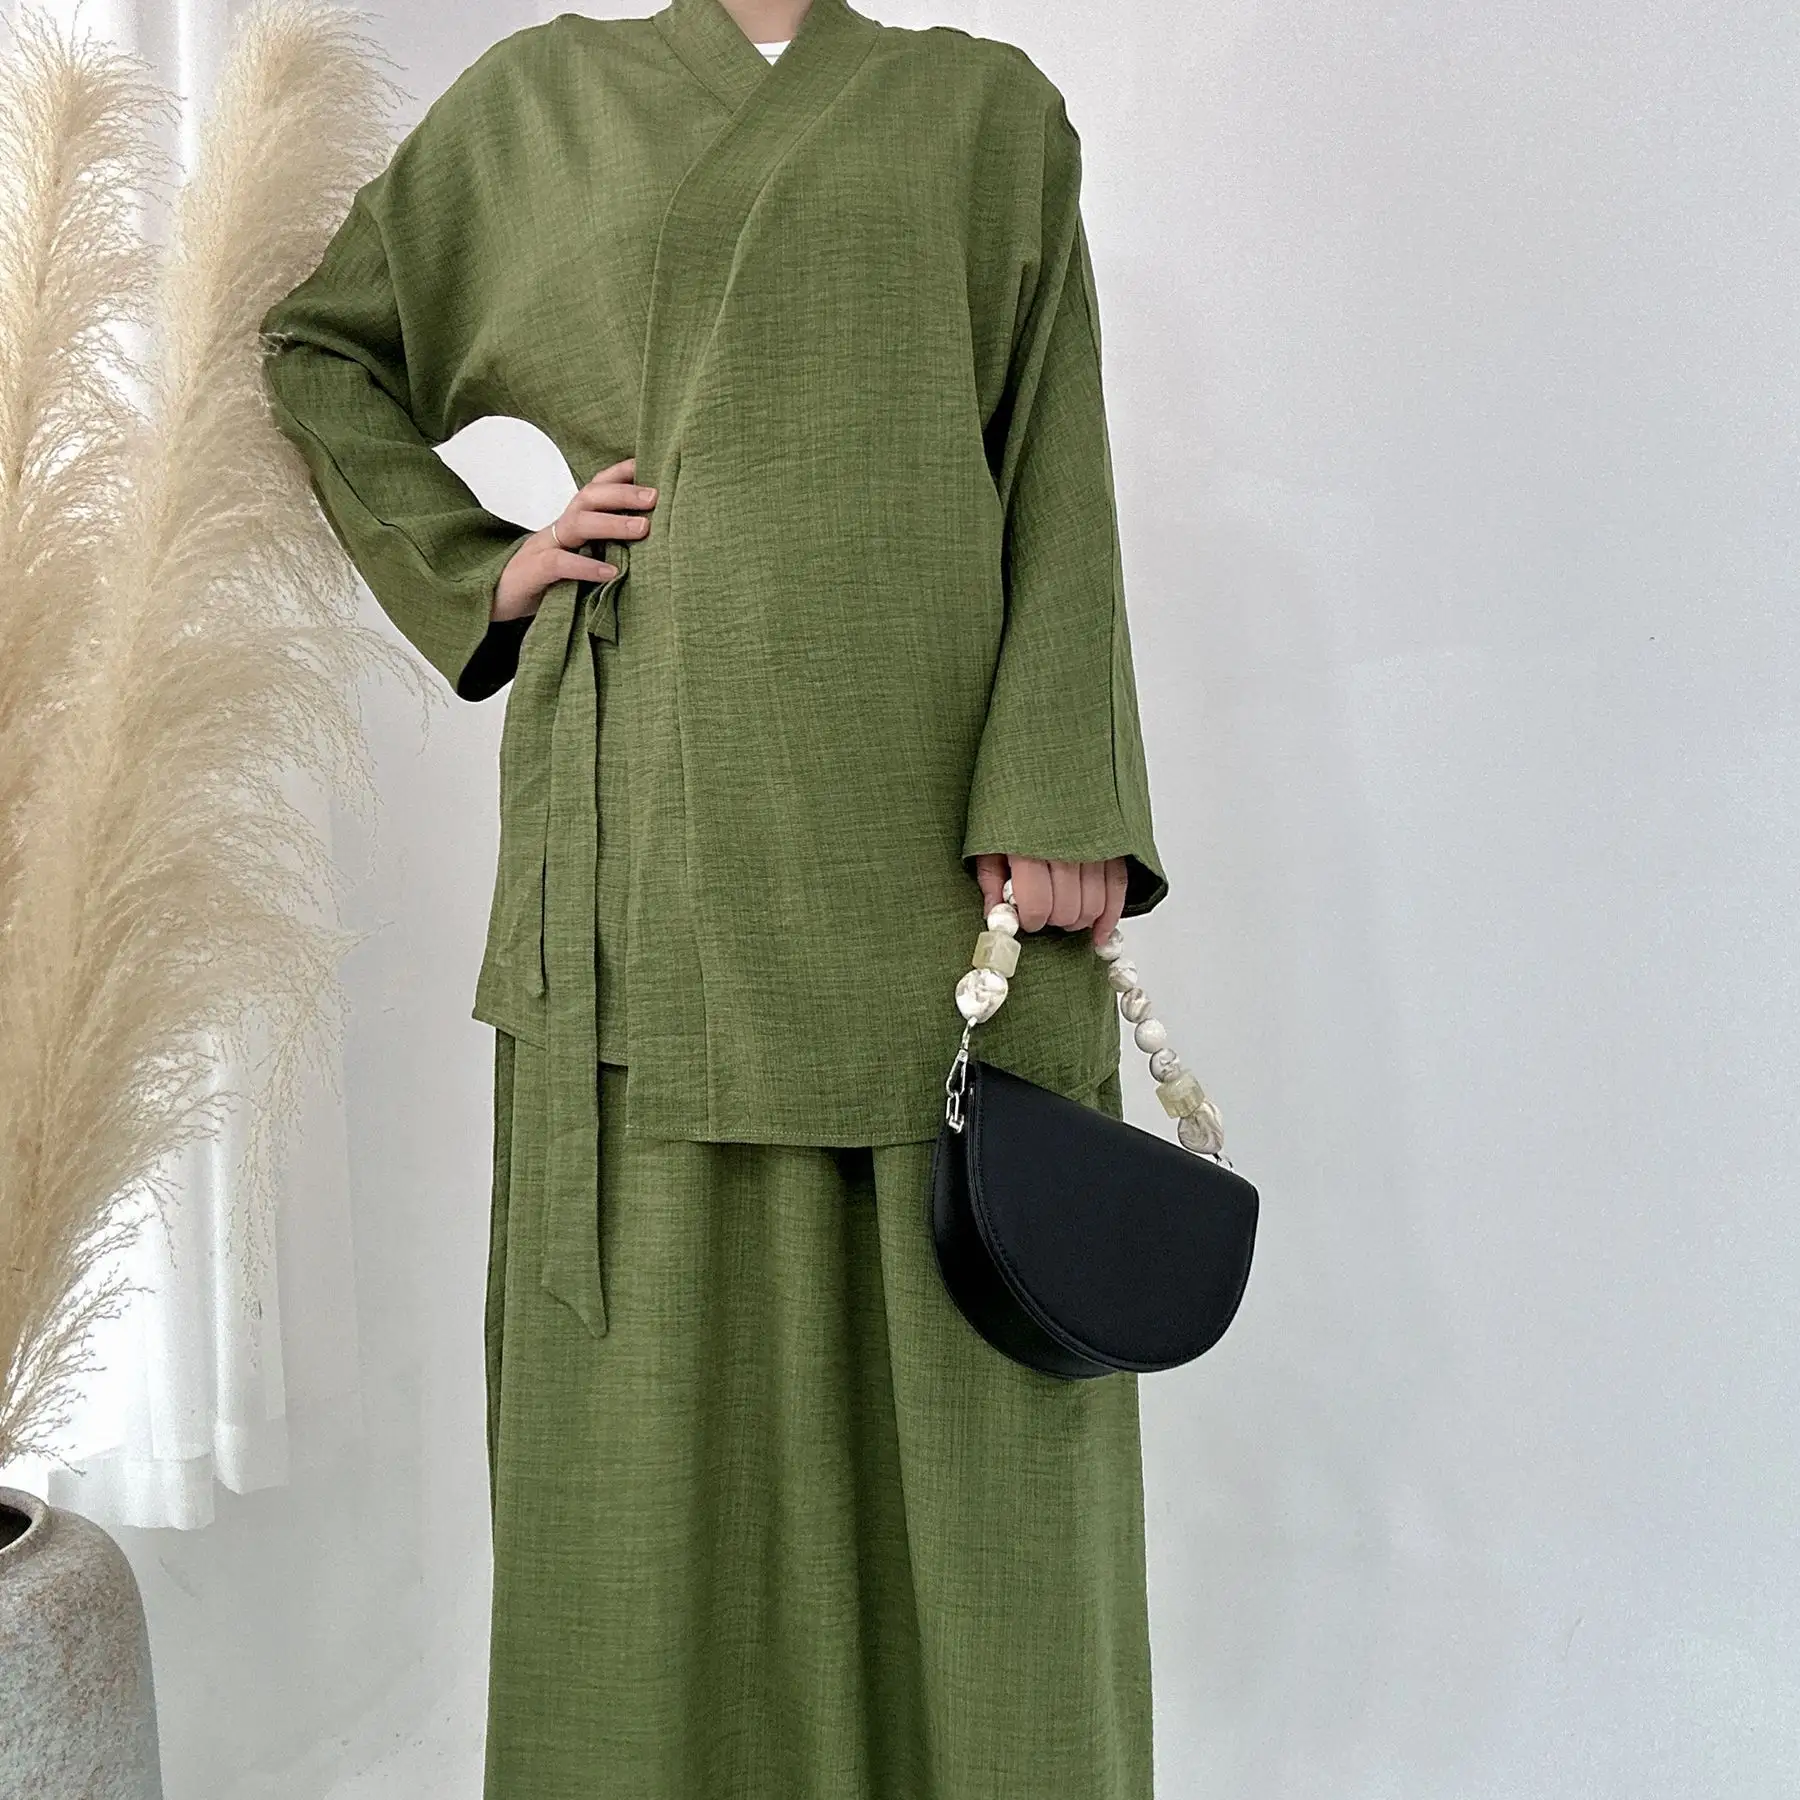 Muslim Women Prayer Clothing Islamic Clothing V-Neck Suit Casual Tie Middle East Dubai Top Half Skirt 2 Piece Set 7169